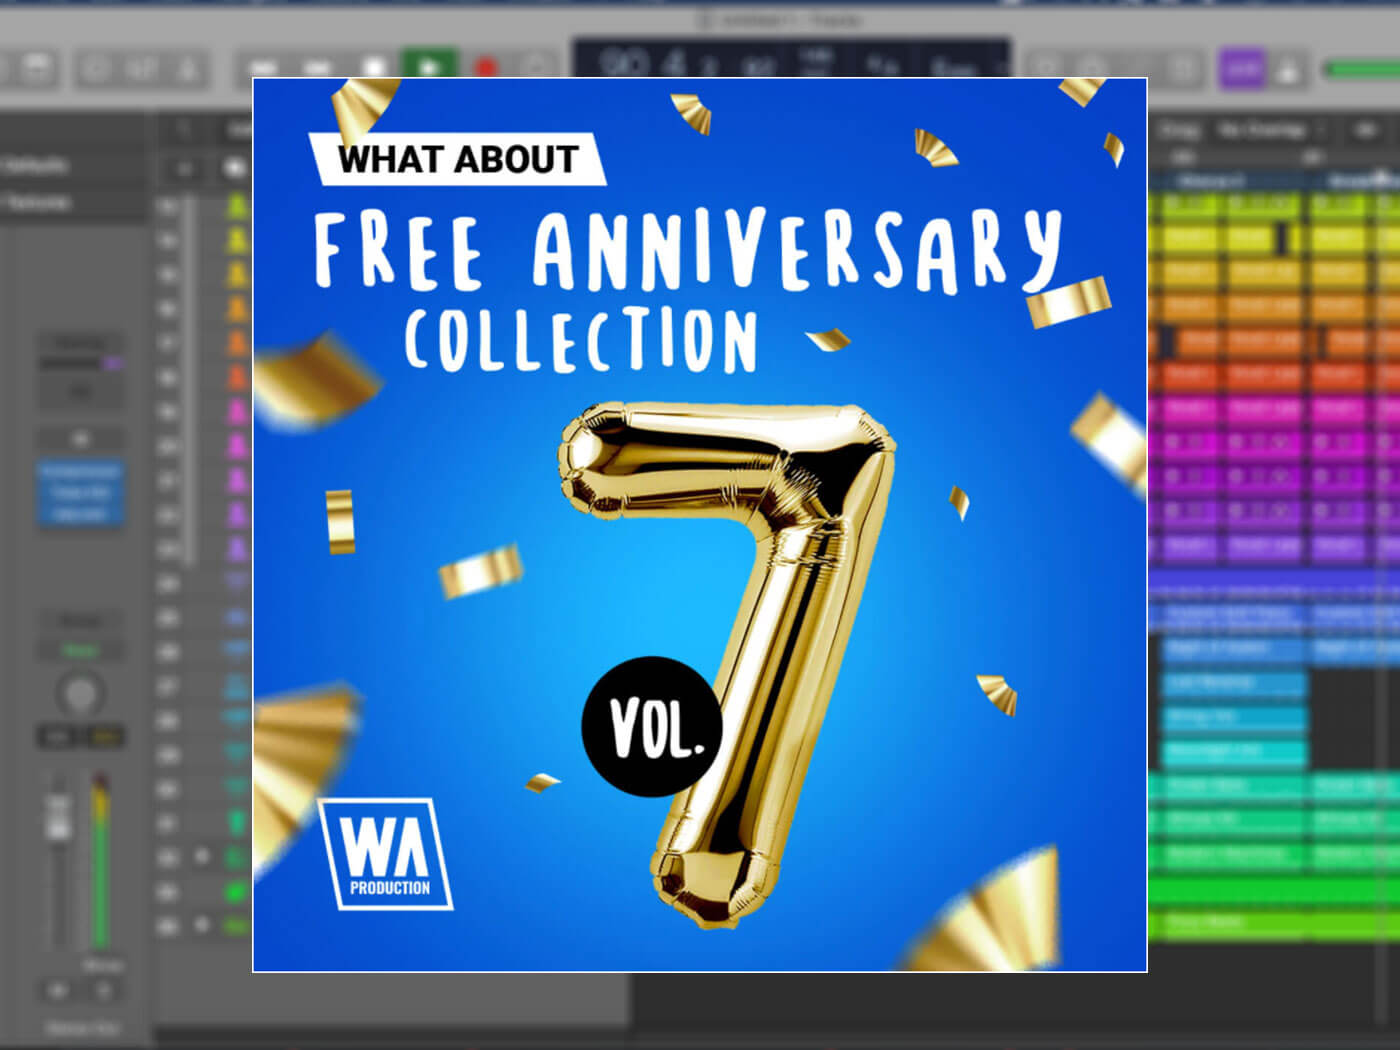 WA Production Free Anniversary Collection Vol 7